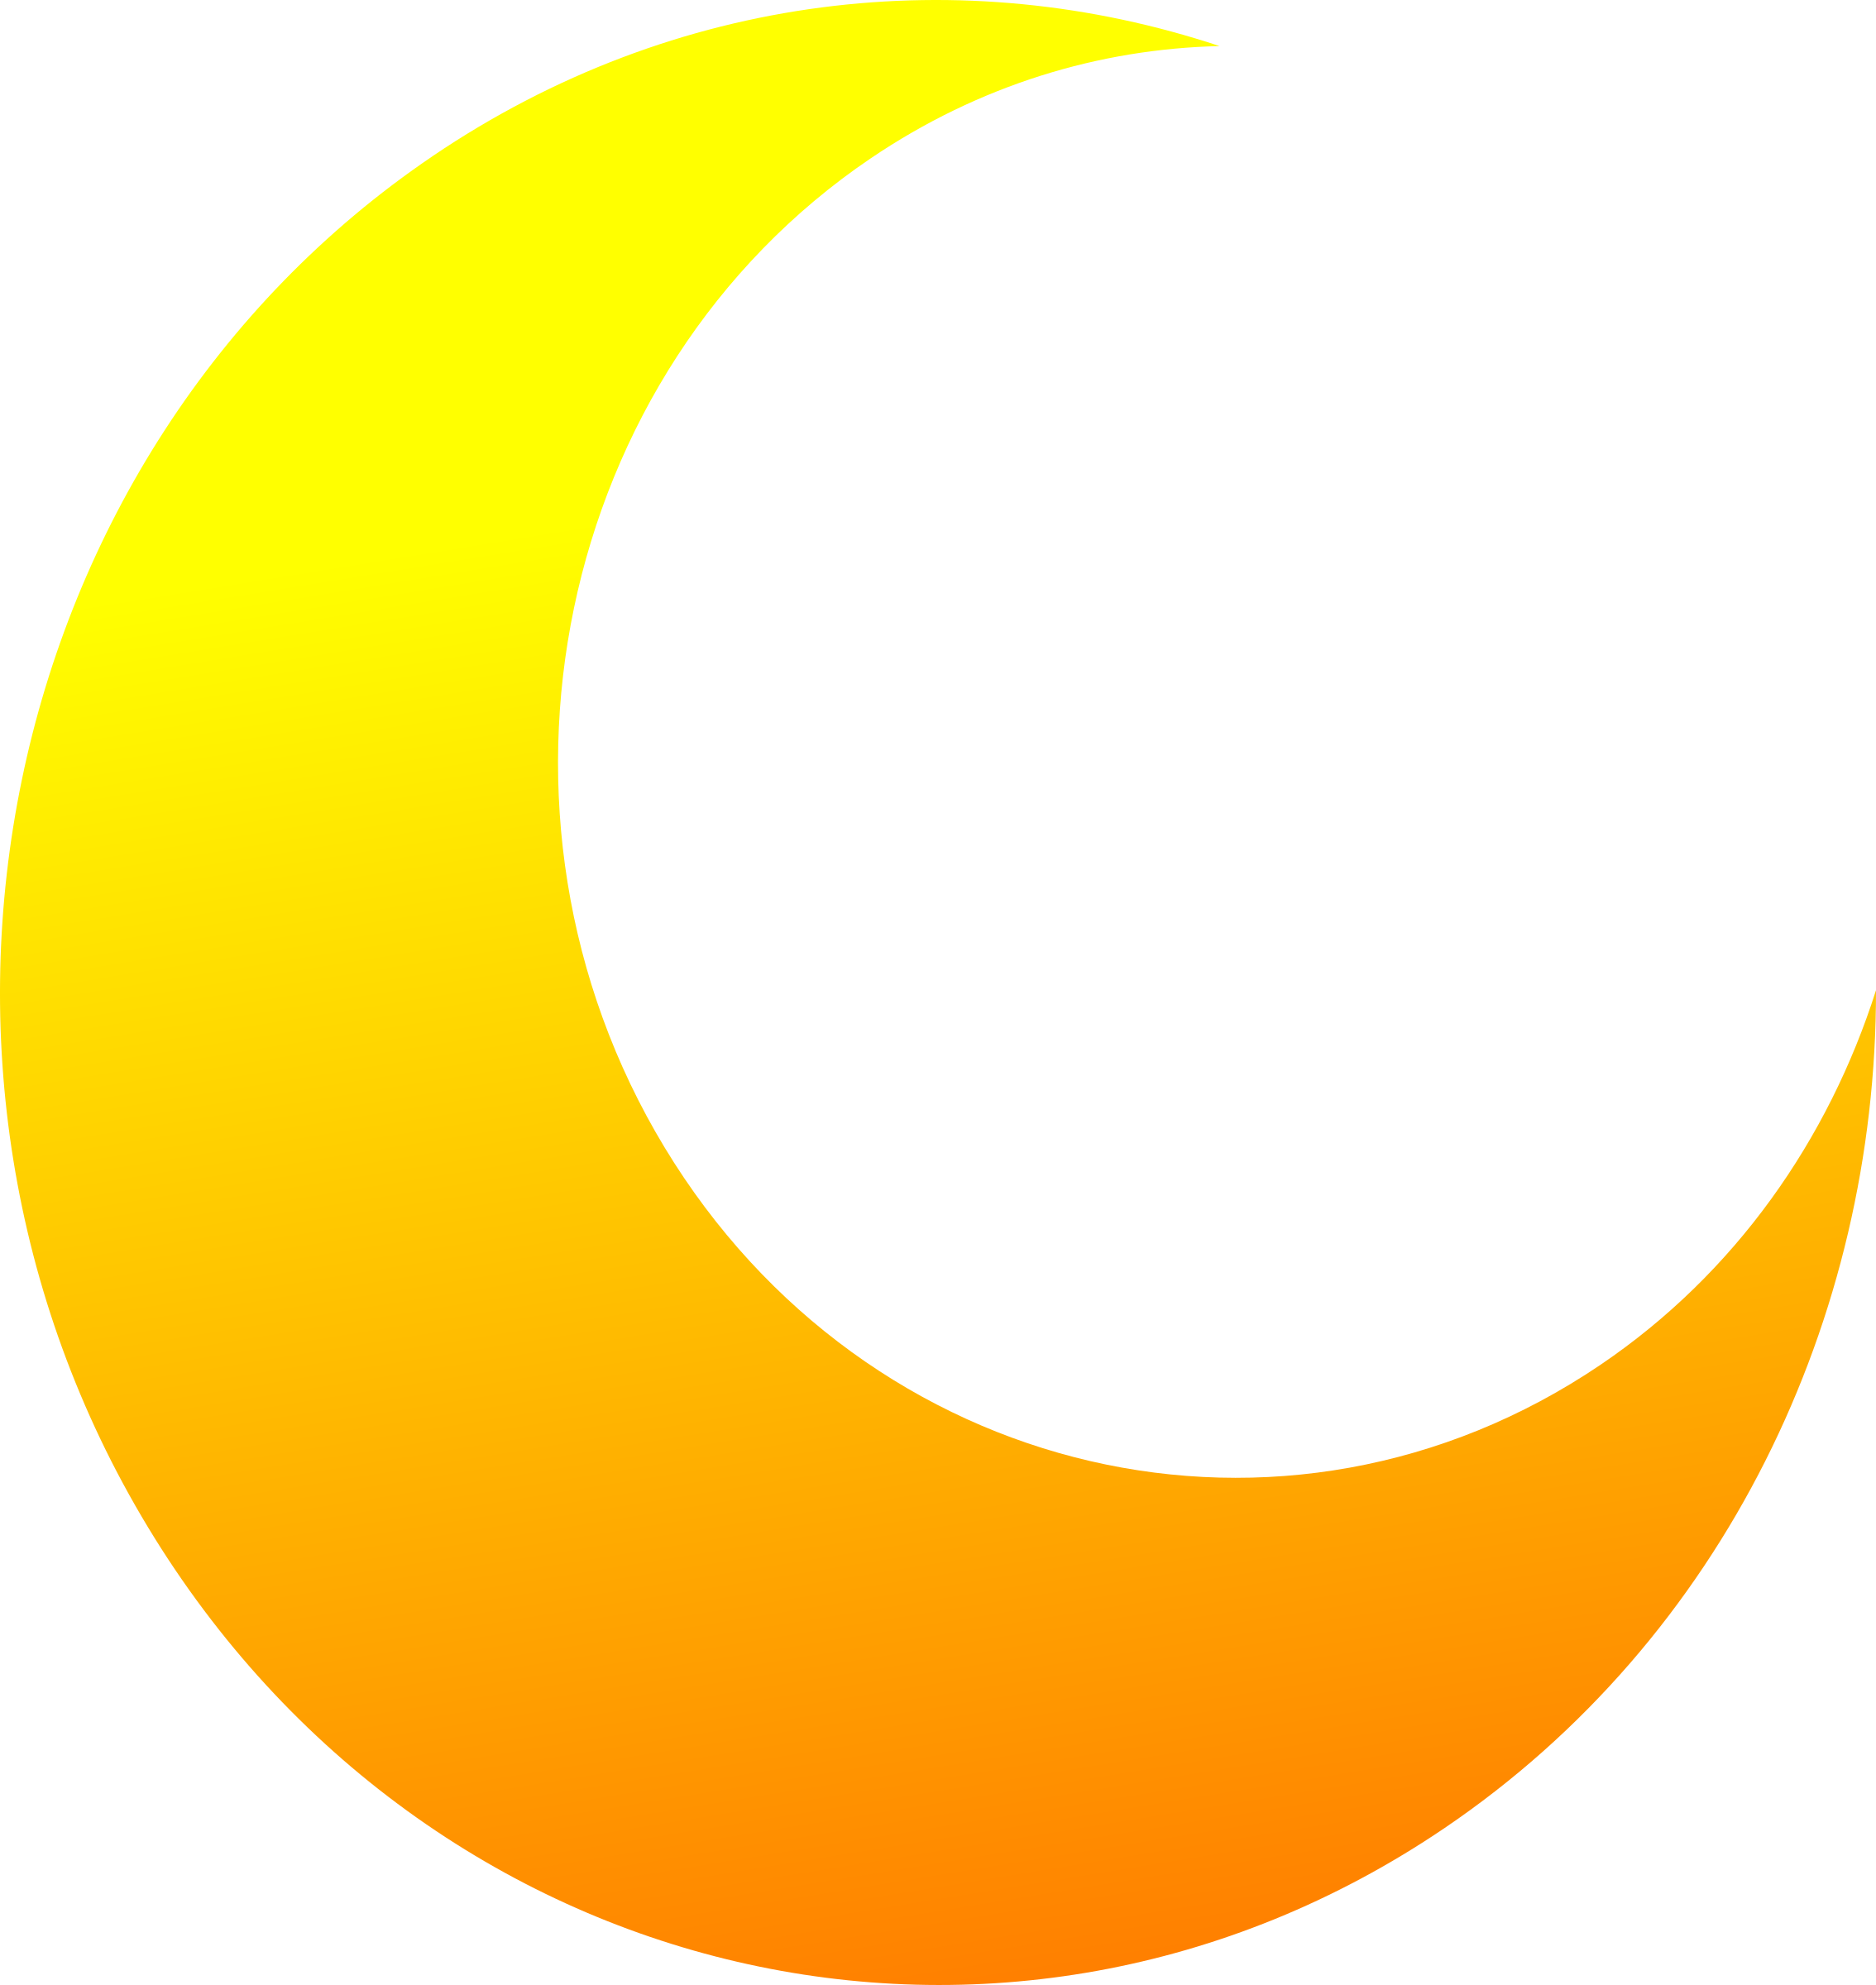 Download Yellow Crescent Half Moon Vector Clipart image - Free ...